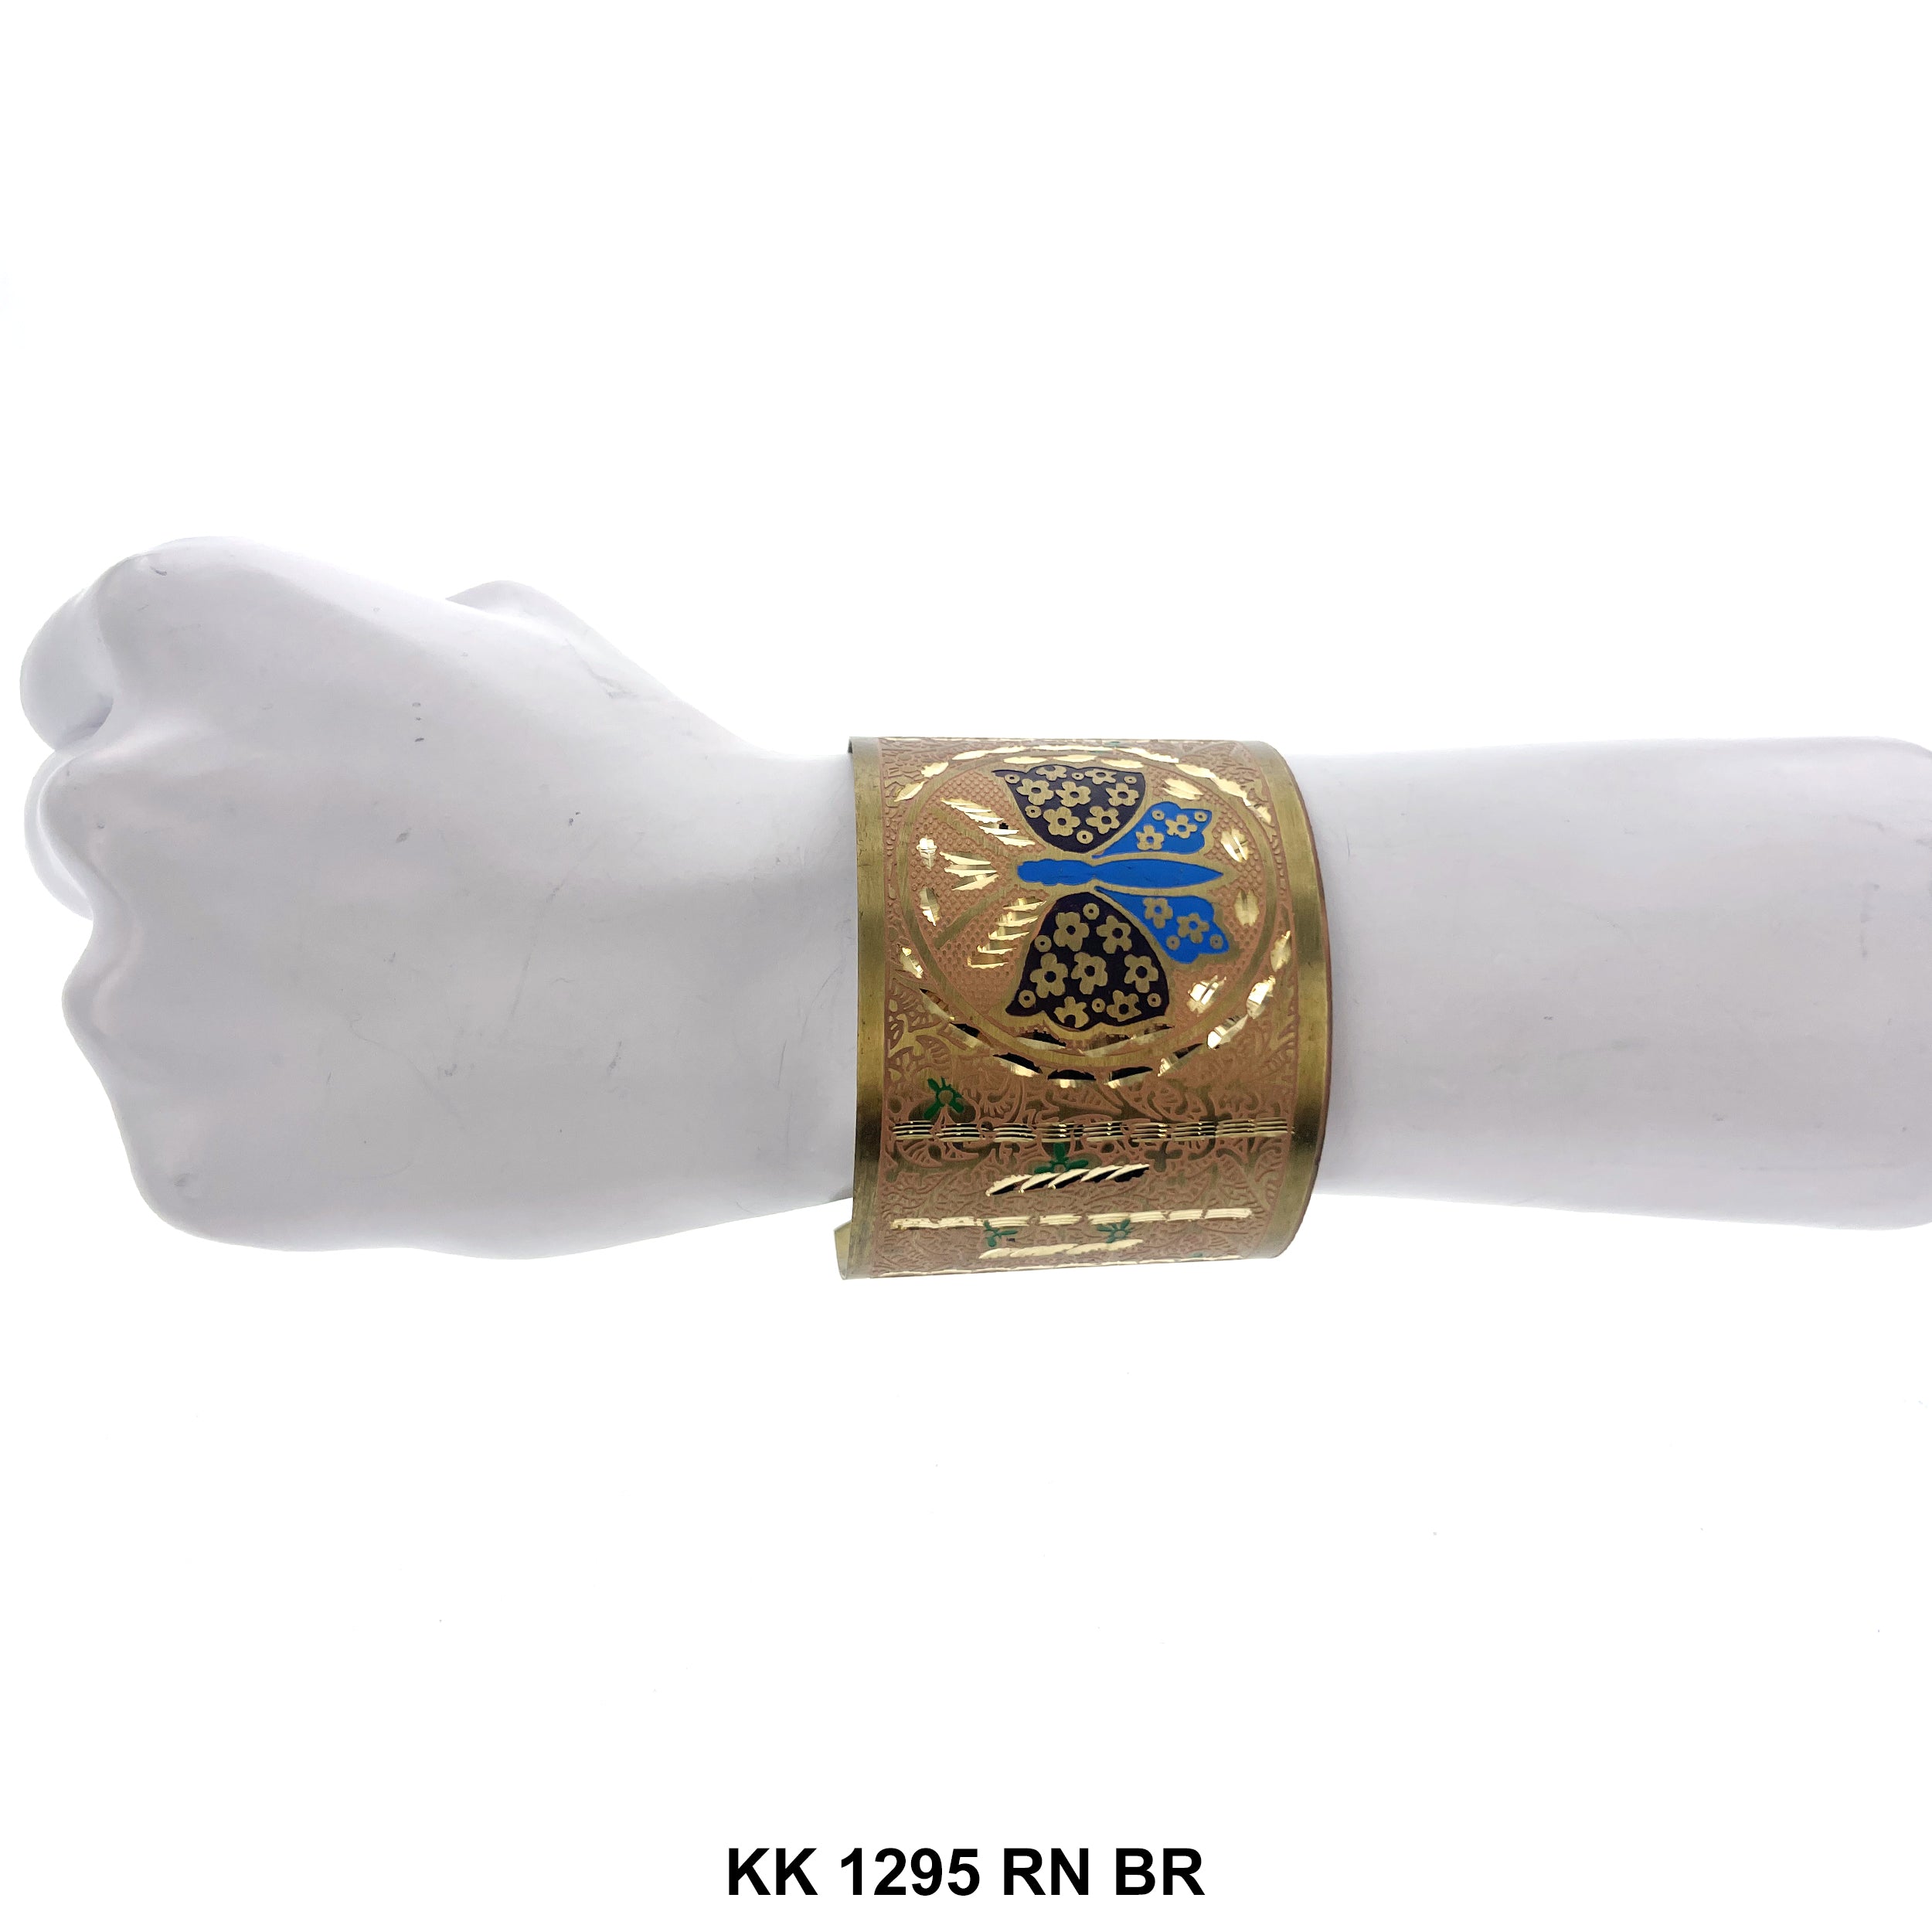 Hand Engraved Cuff Bangle Bracelet KK 1295 RN BR